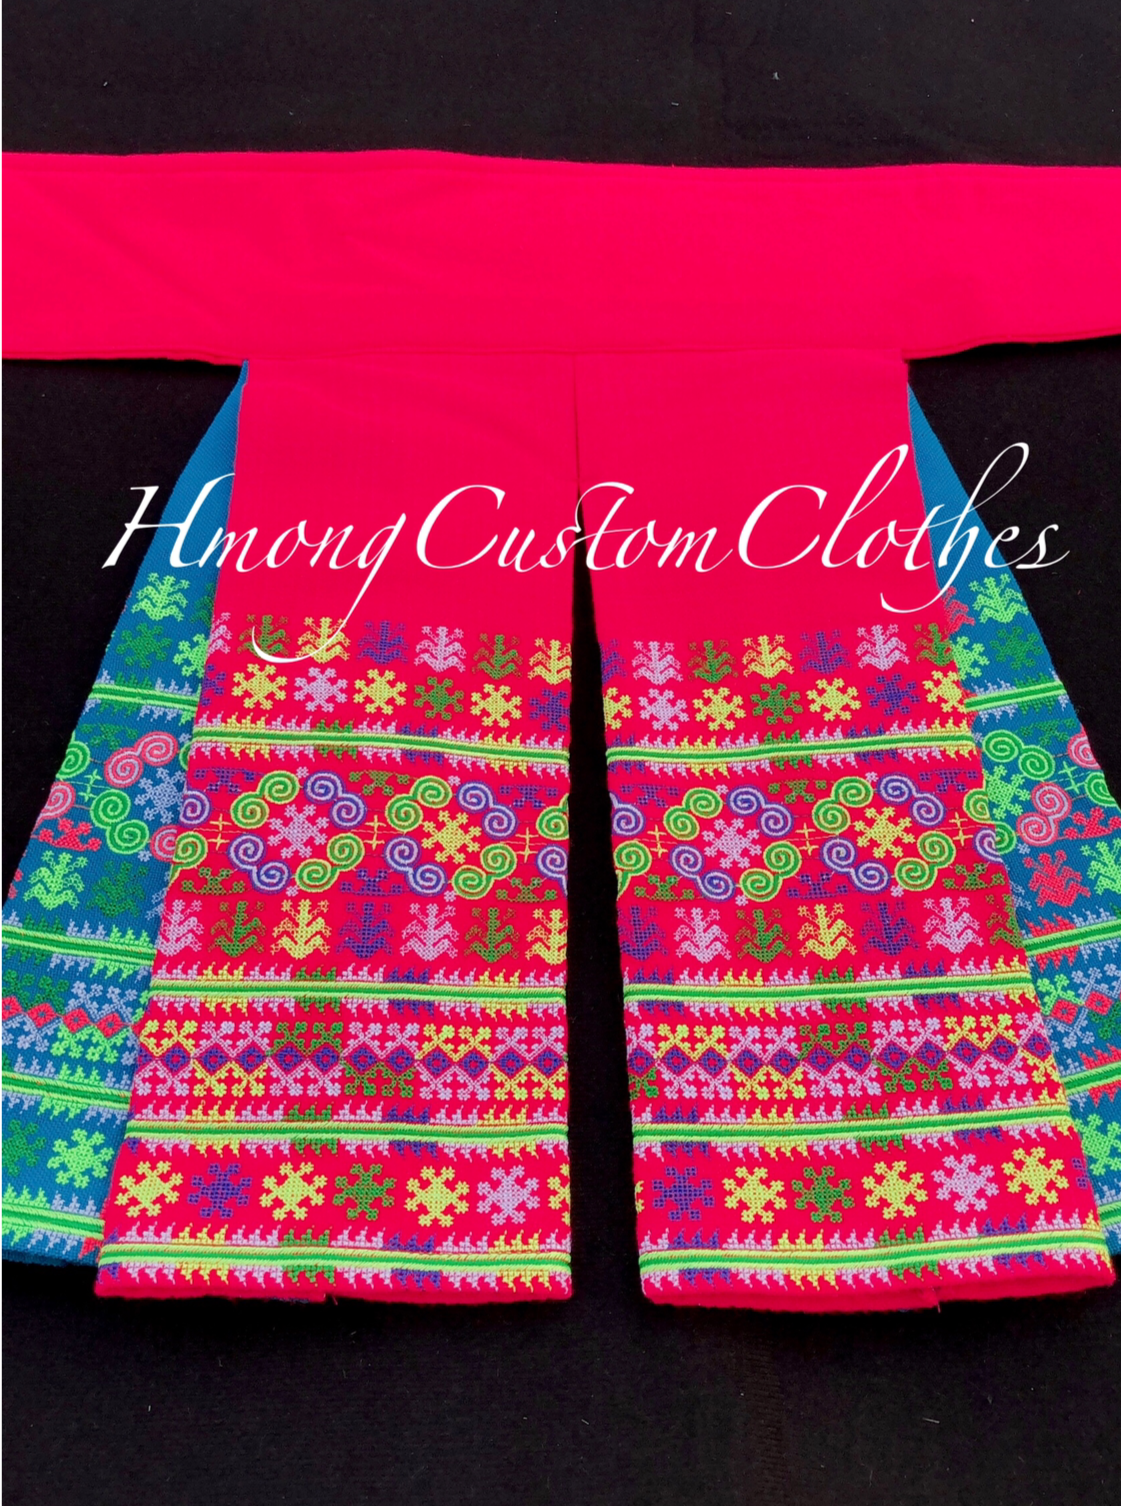 Hmong clothes - Pink/Light blue - Hmong Custom Clothes